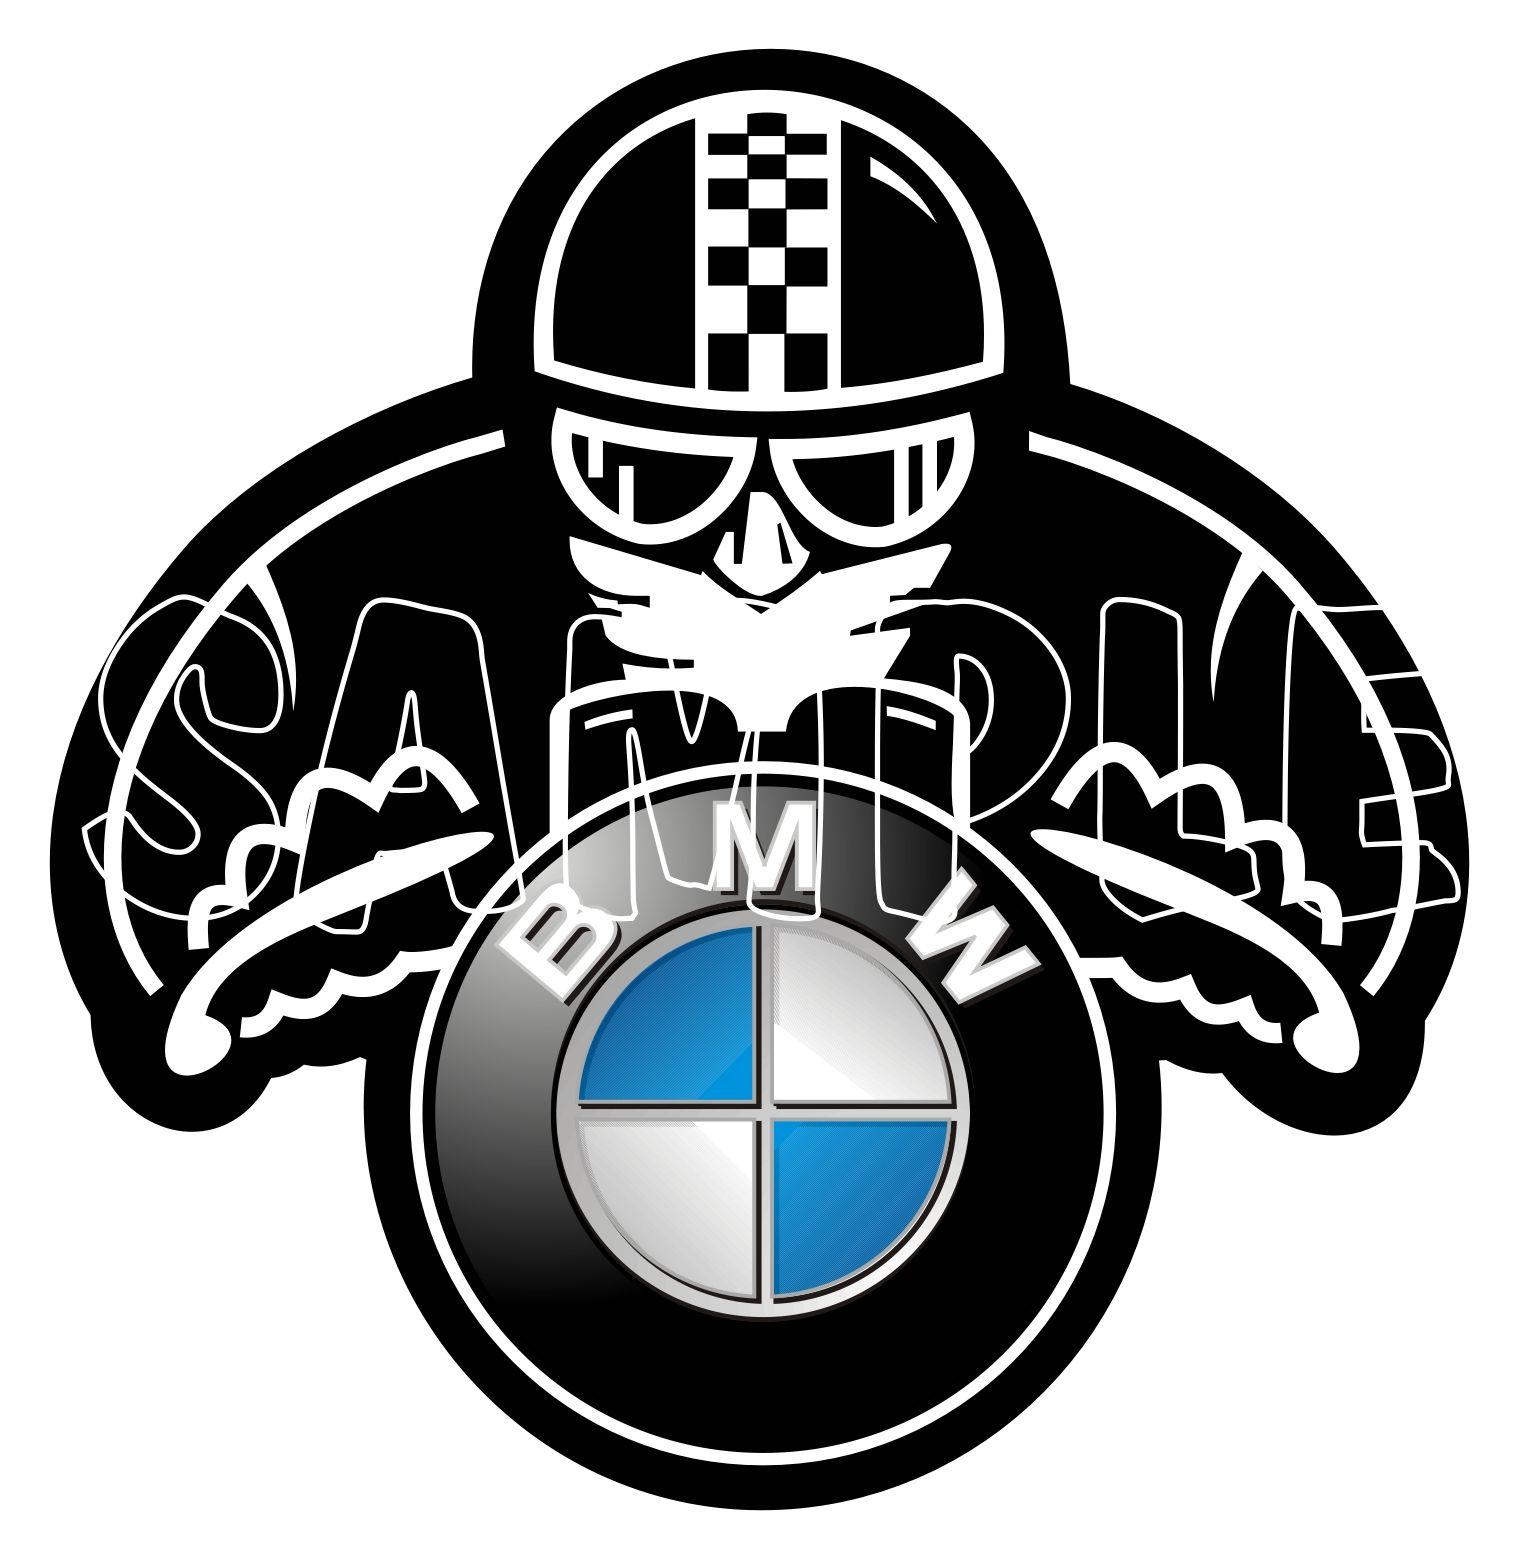 Old BMW Logo - BMW Old School Cafe Racer Sticker. – ipoppin shop